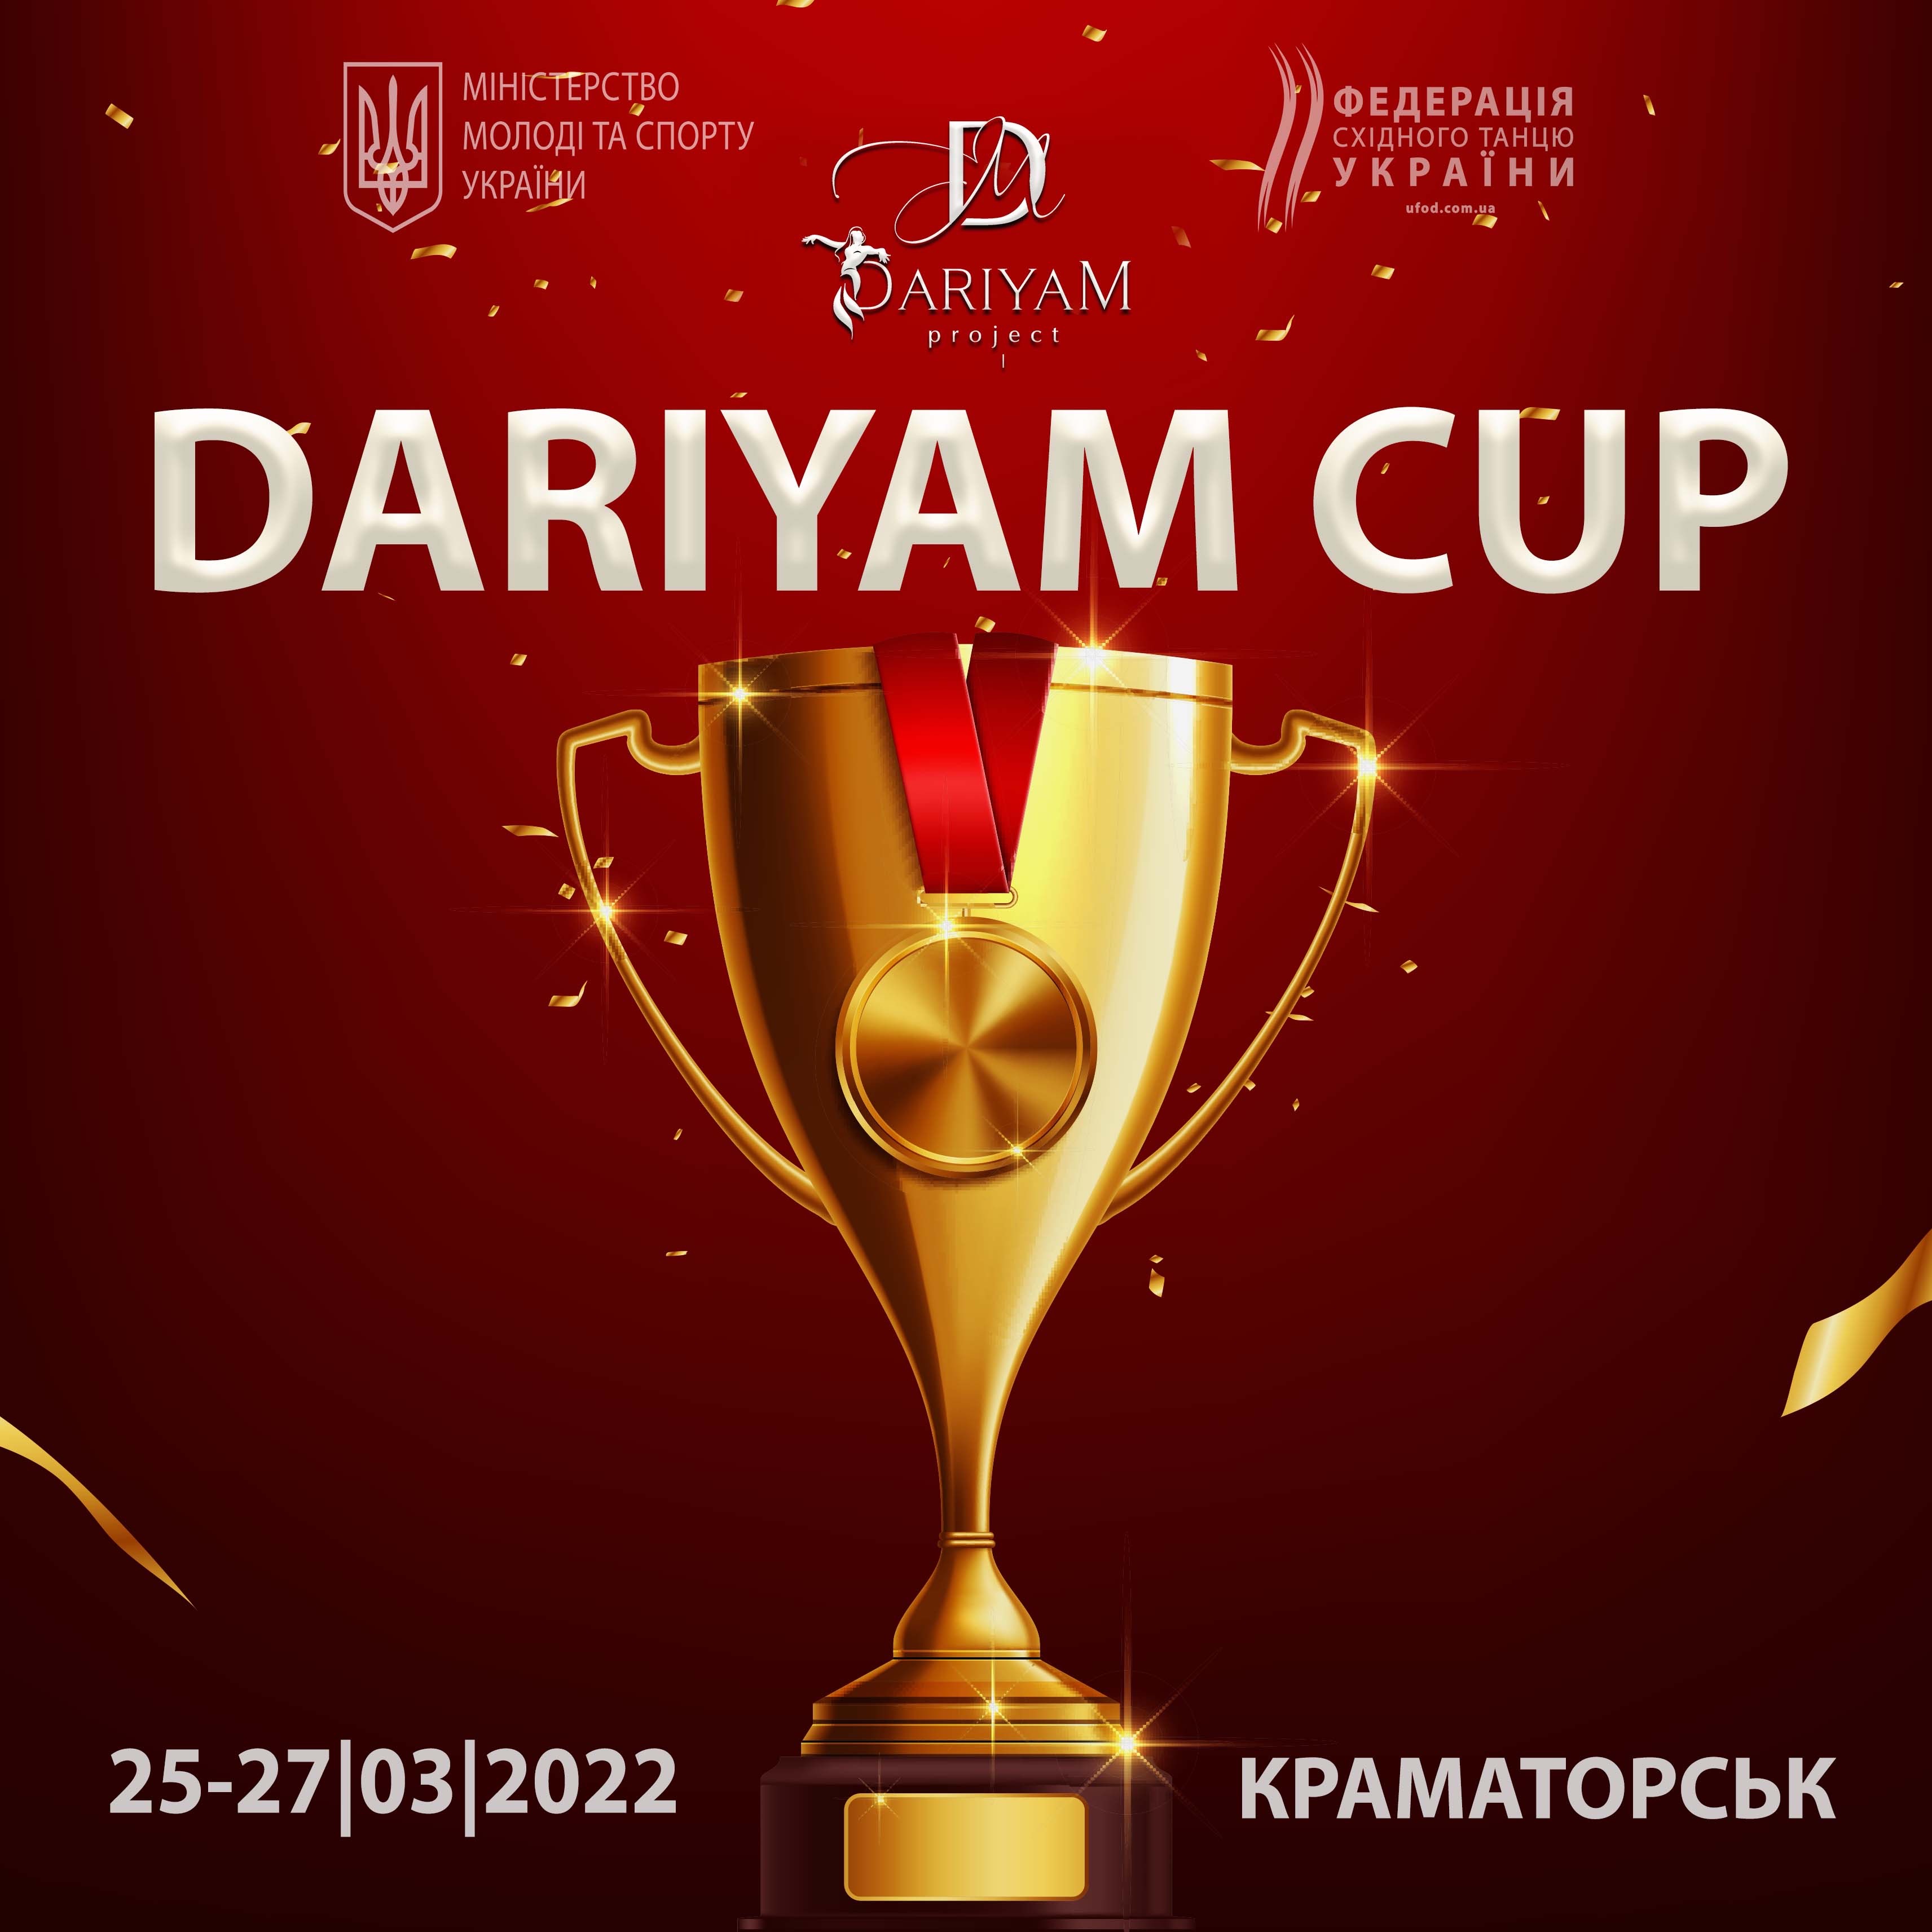 DariyaM Cup -2022